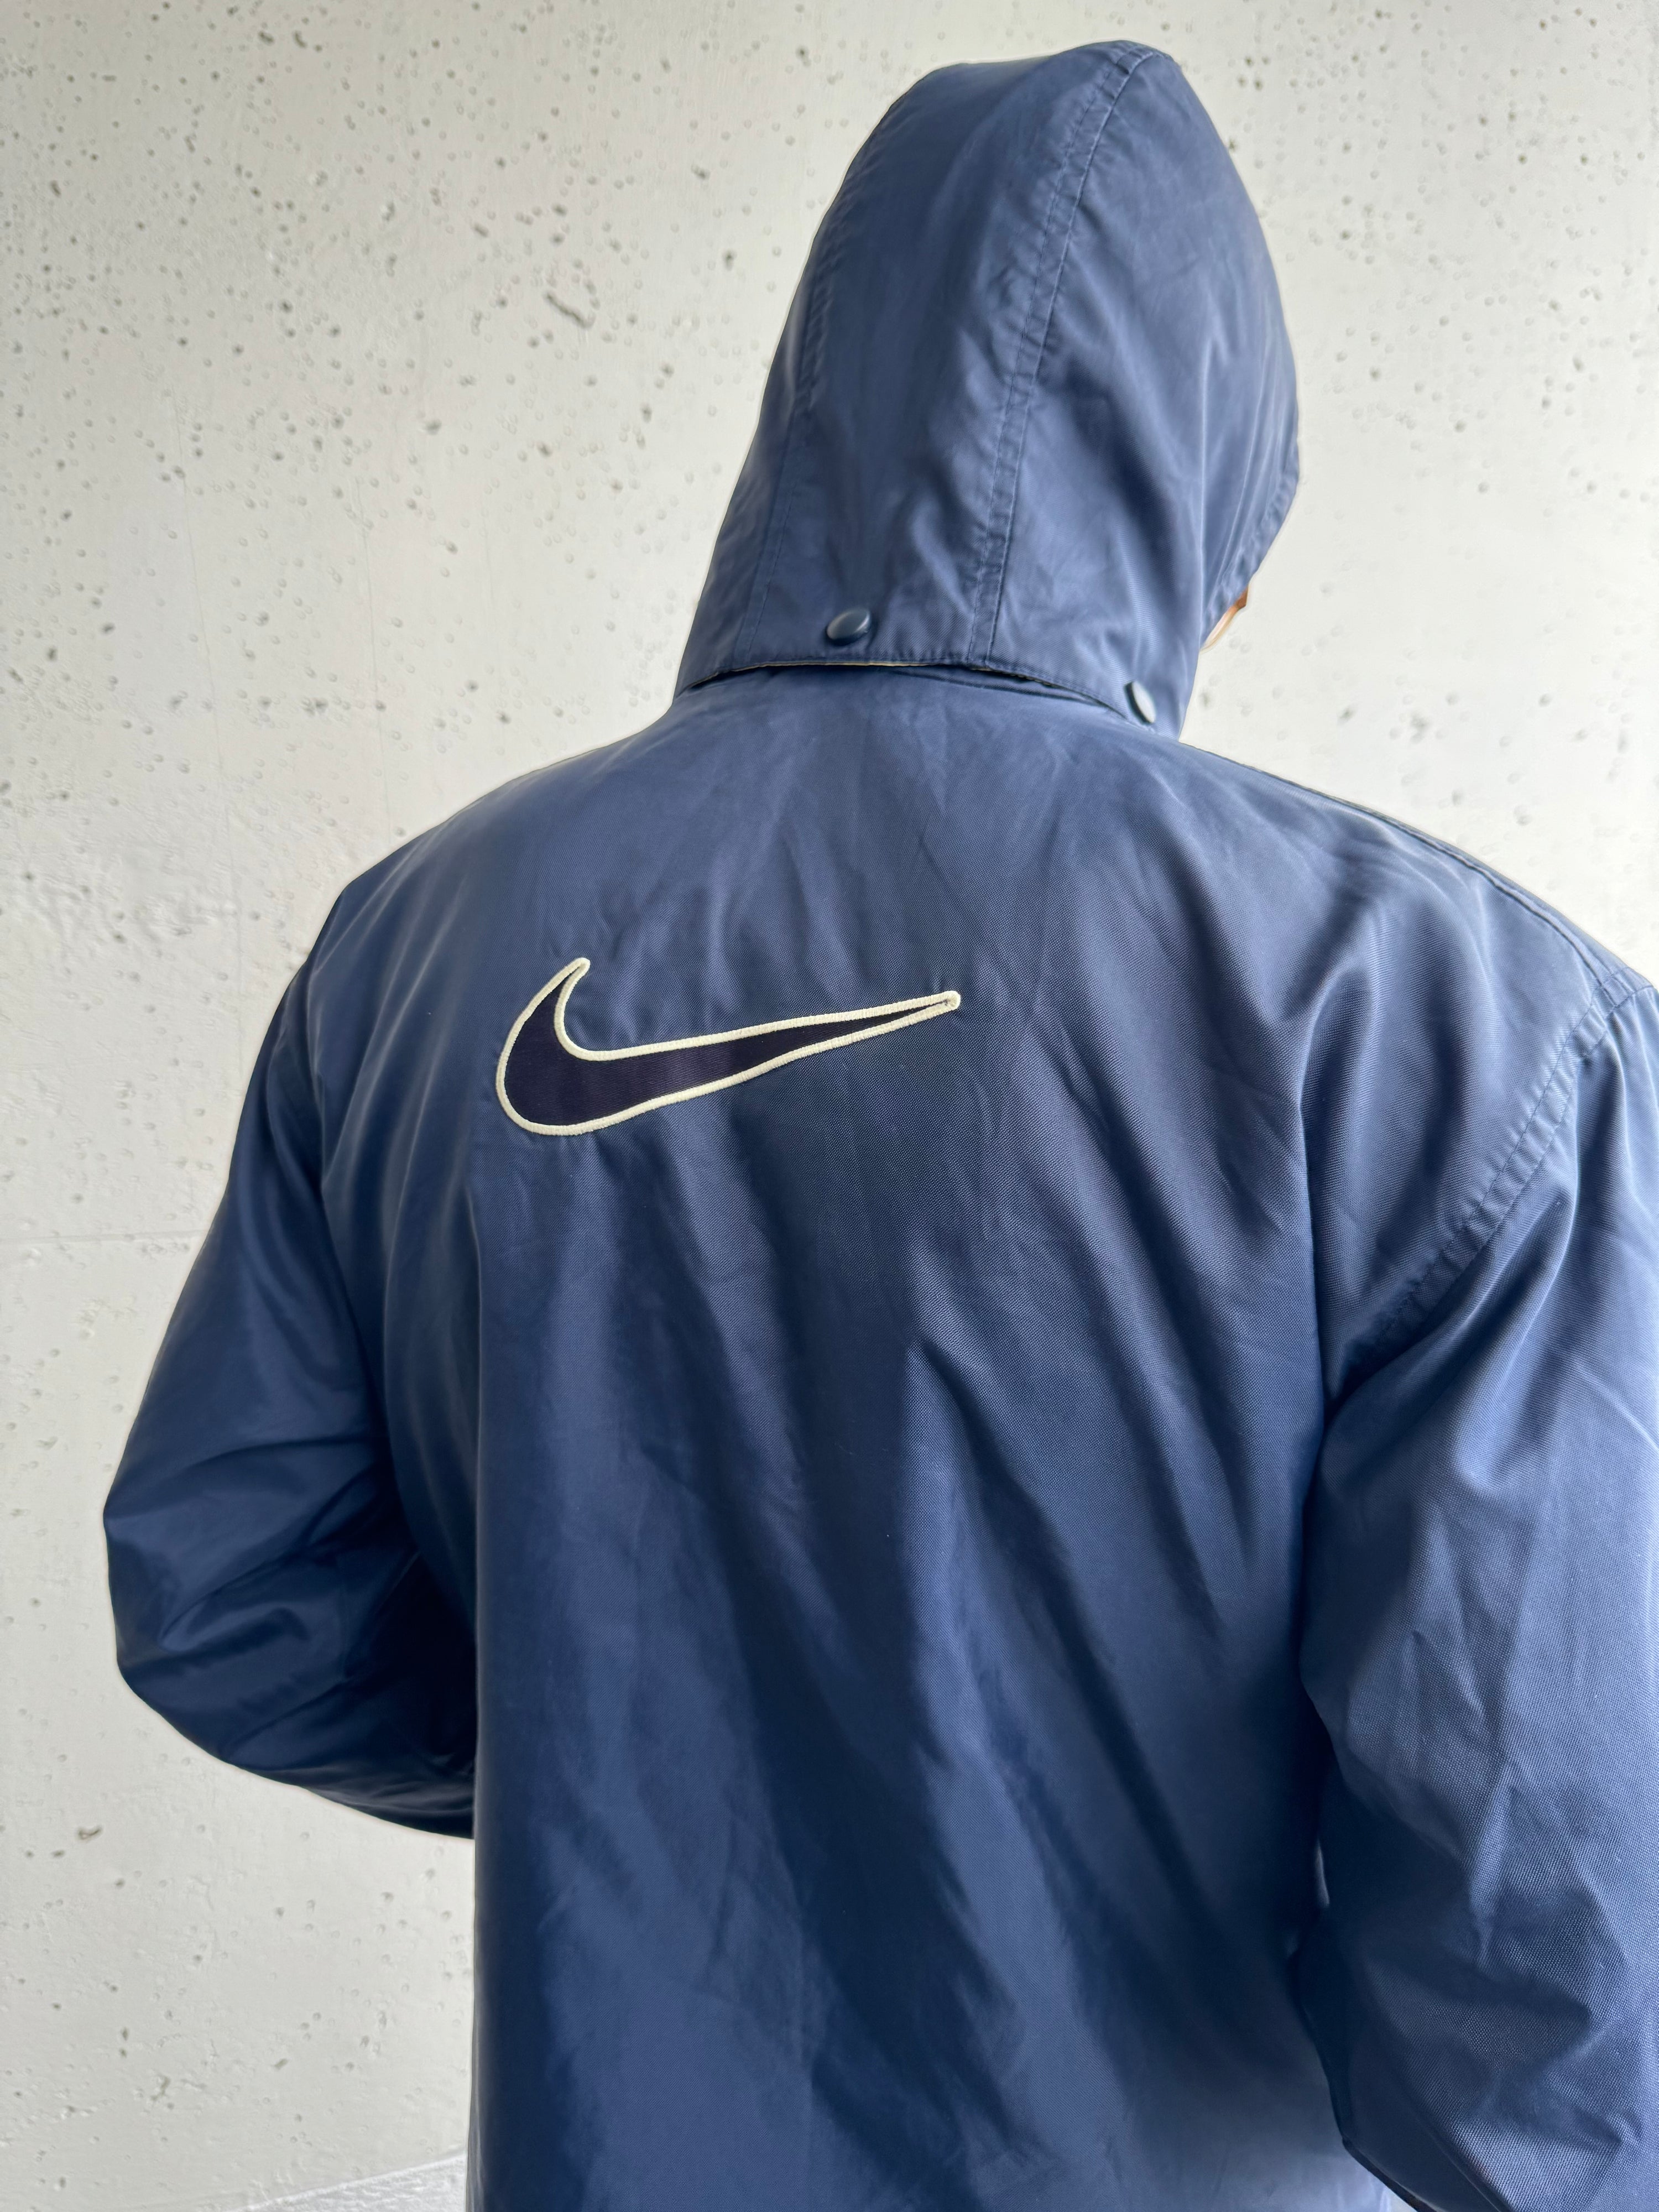 Vintage 90s Nike Swoosh Jacket (L)